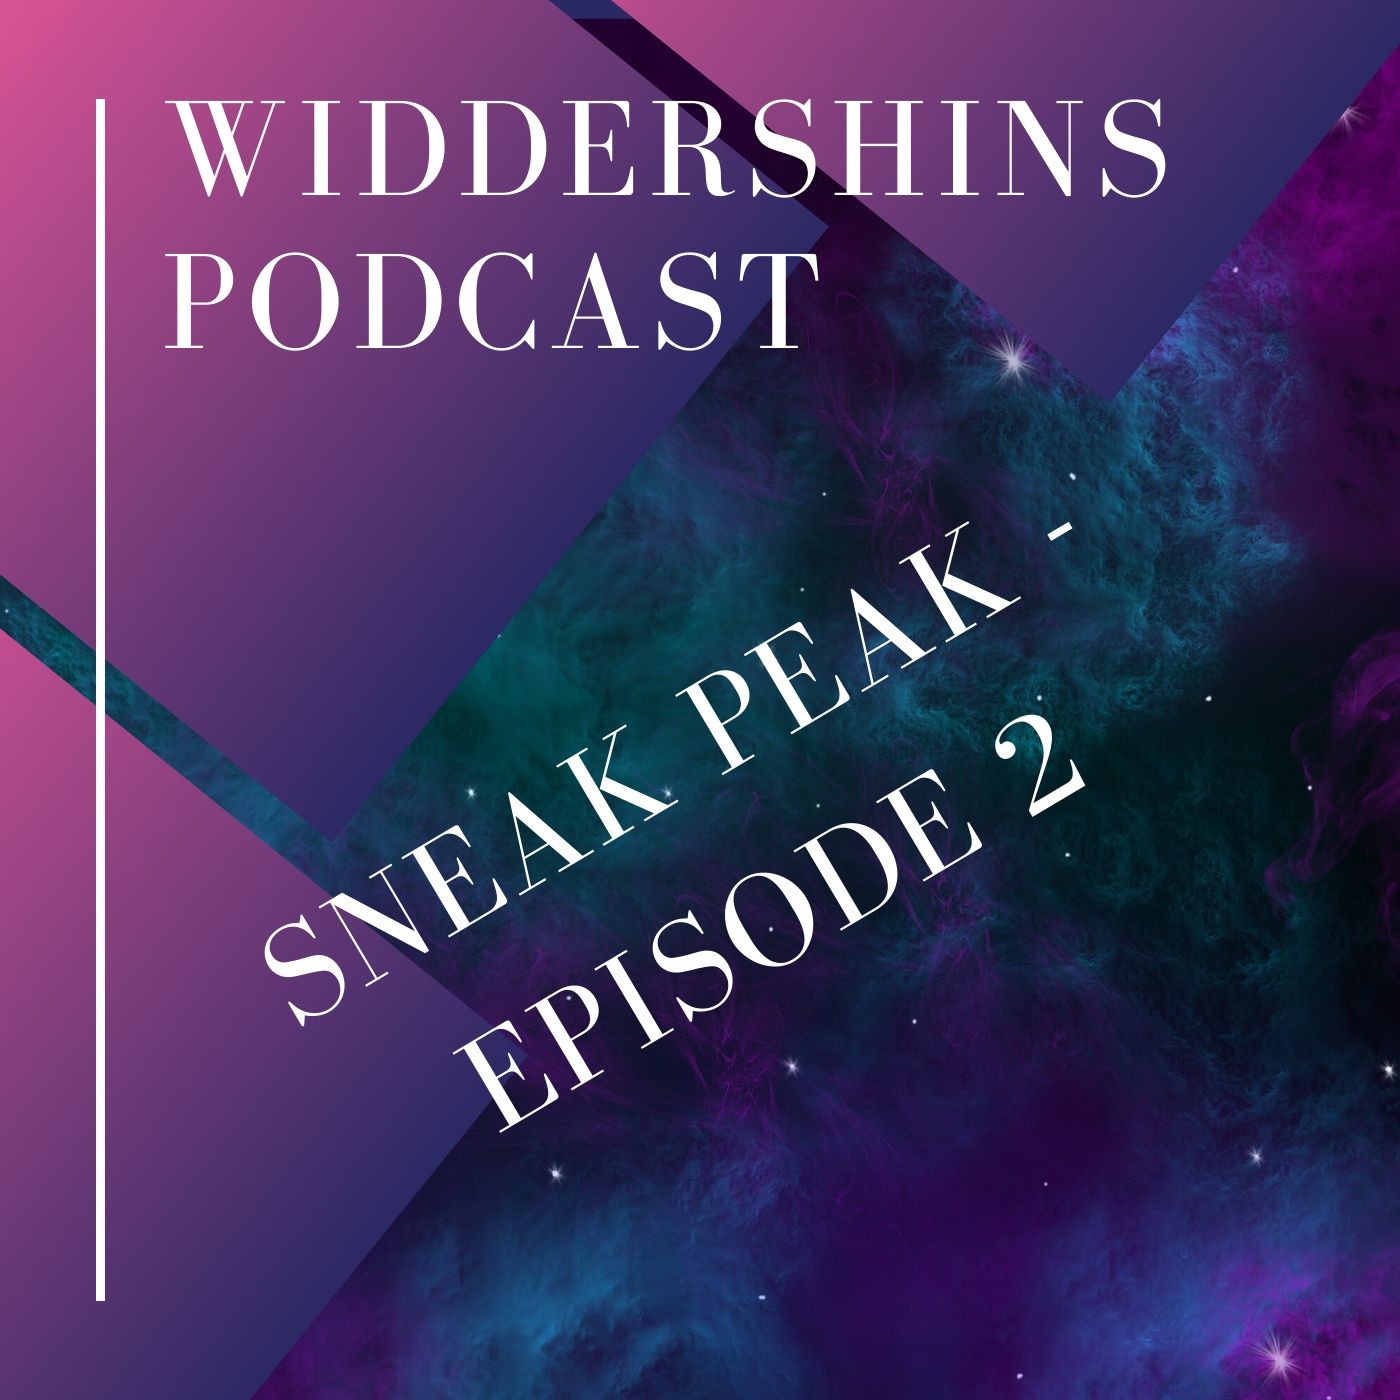 PROMO - Next week on Widdershins Podcast [ EXOPLANETS]